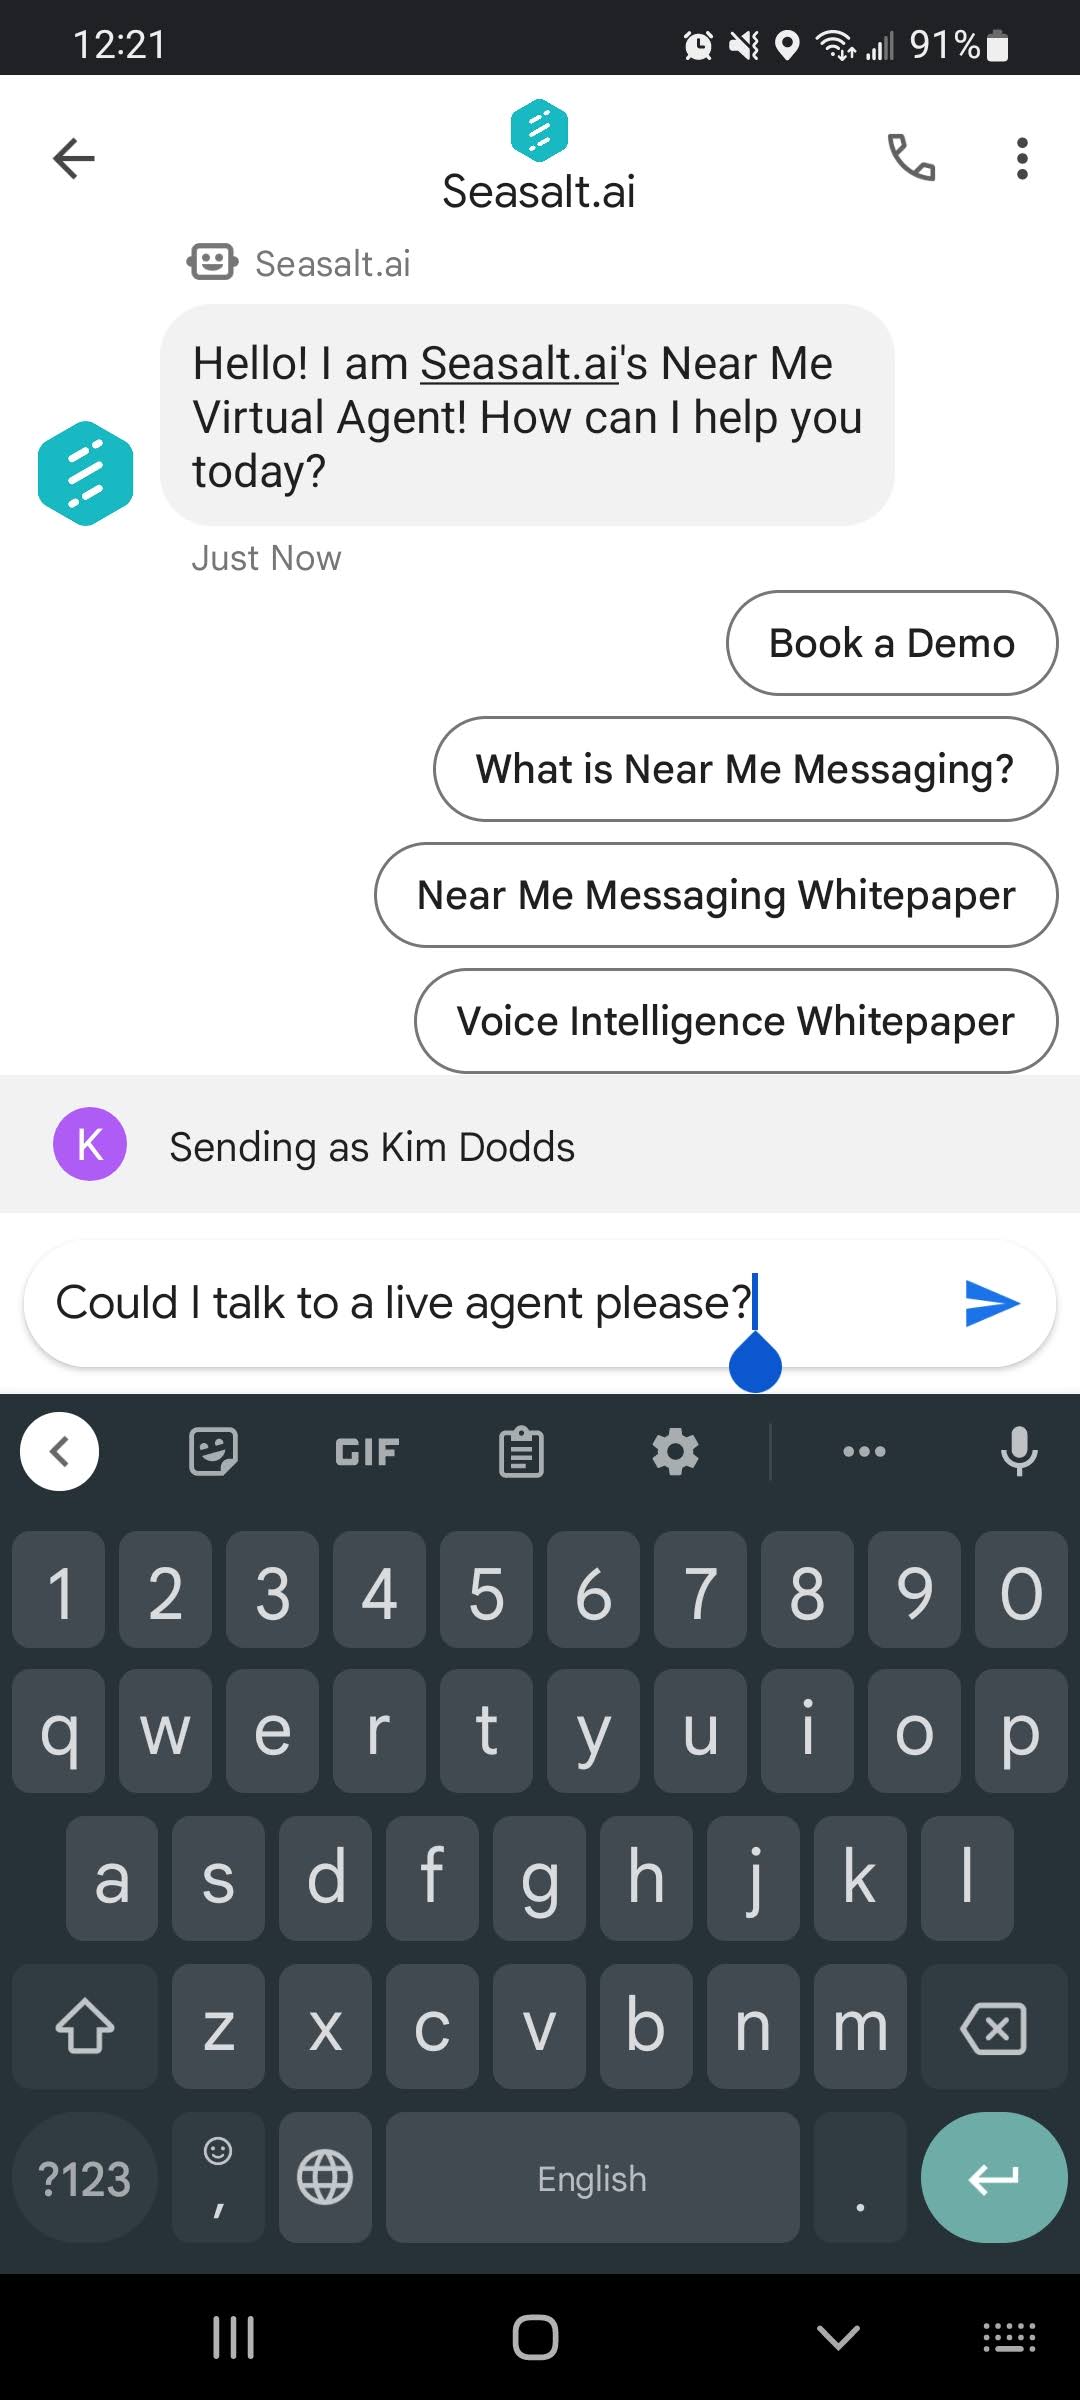 User sends a message to a business via Google Business Messages.